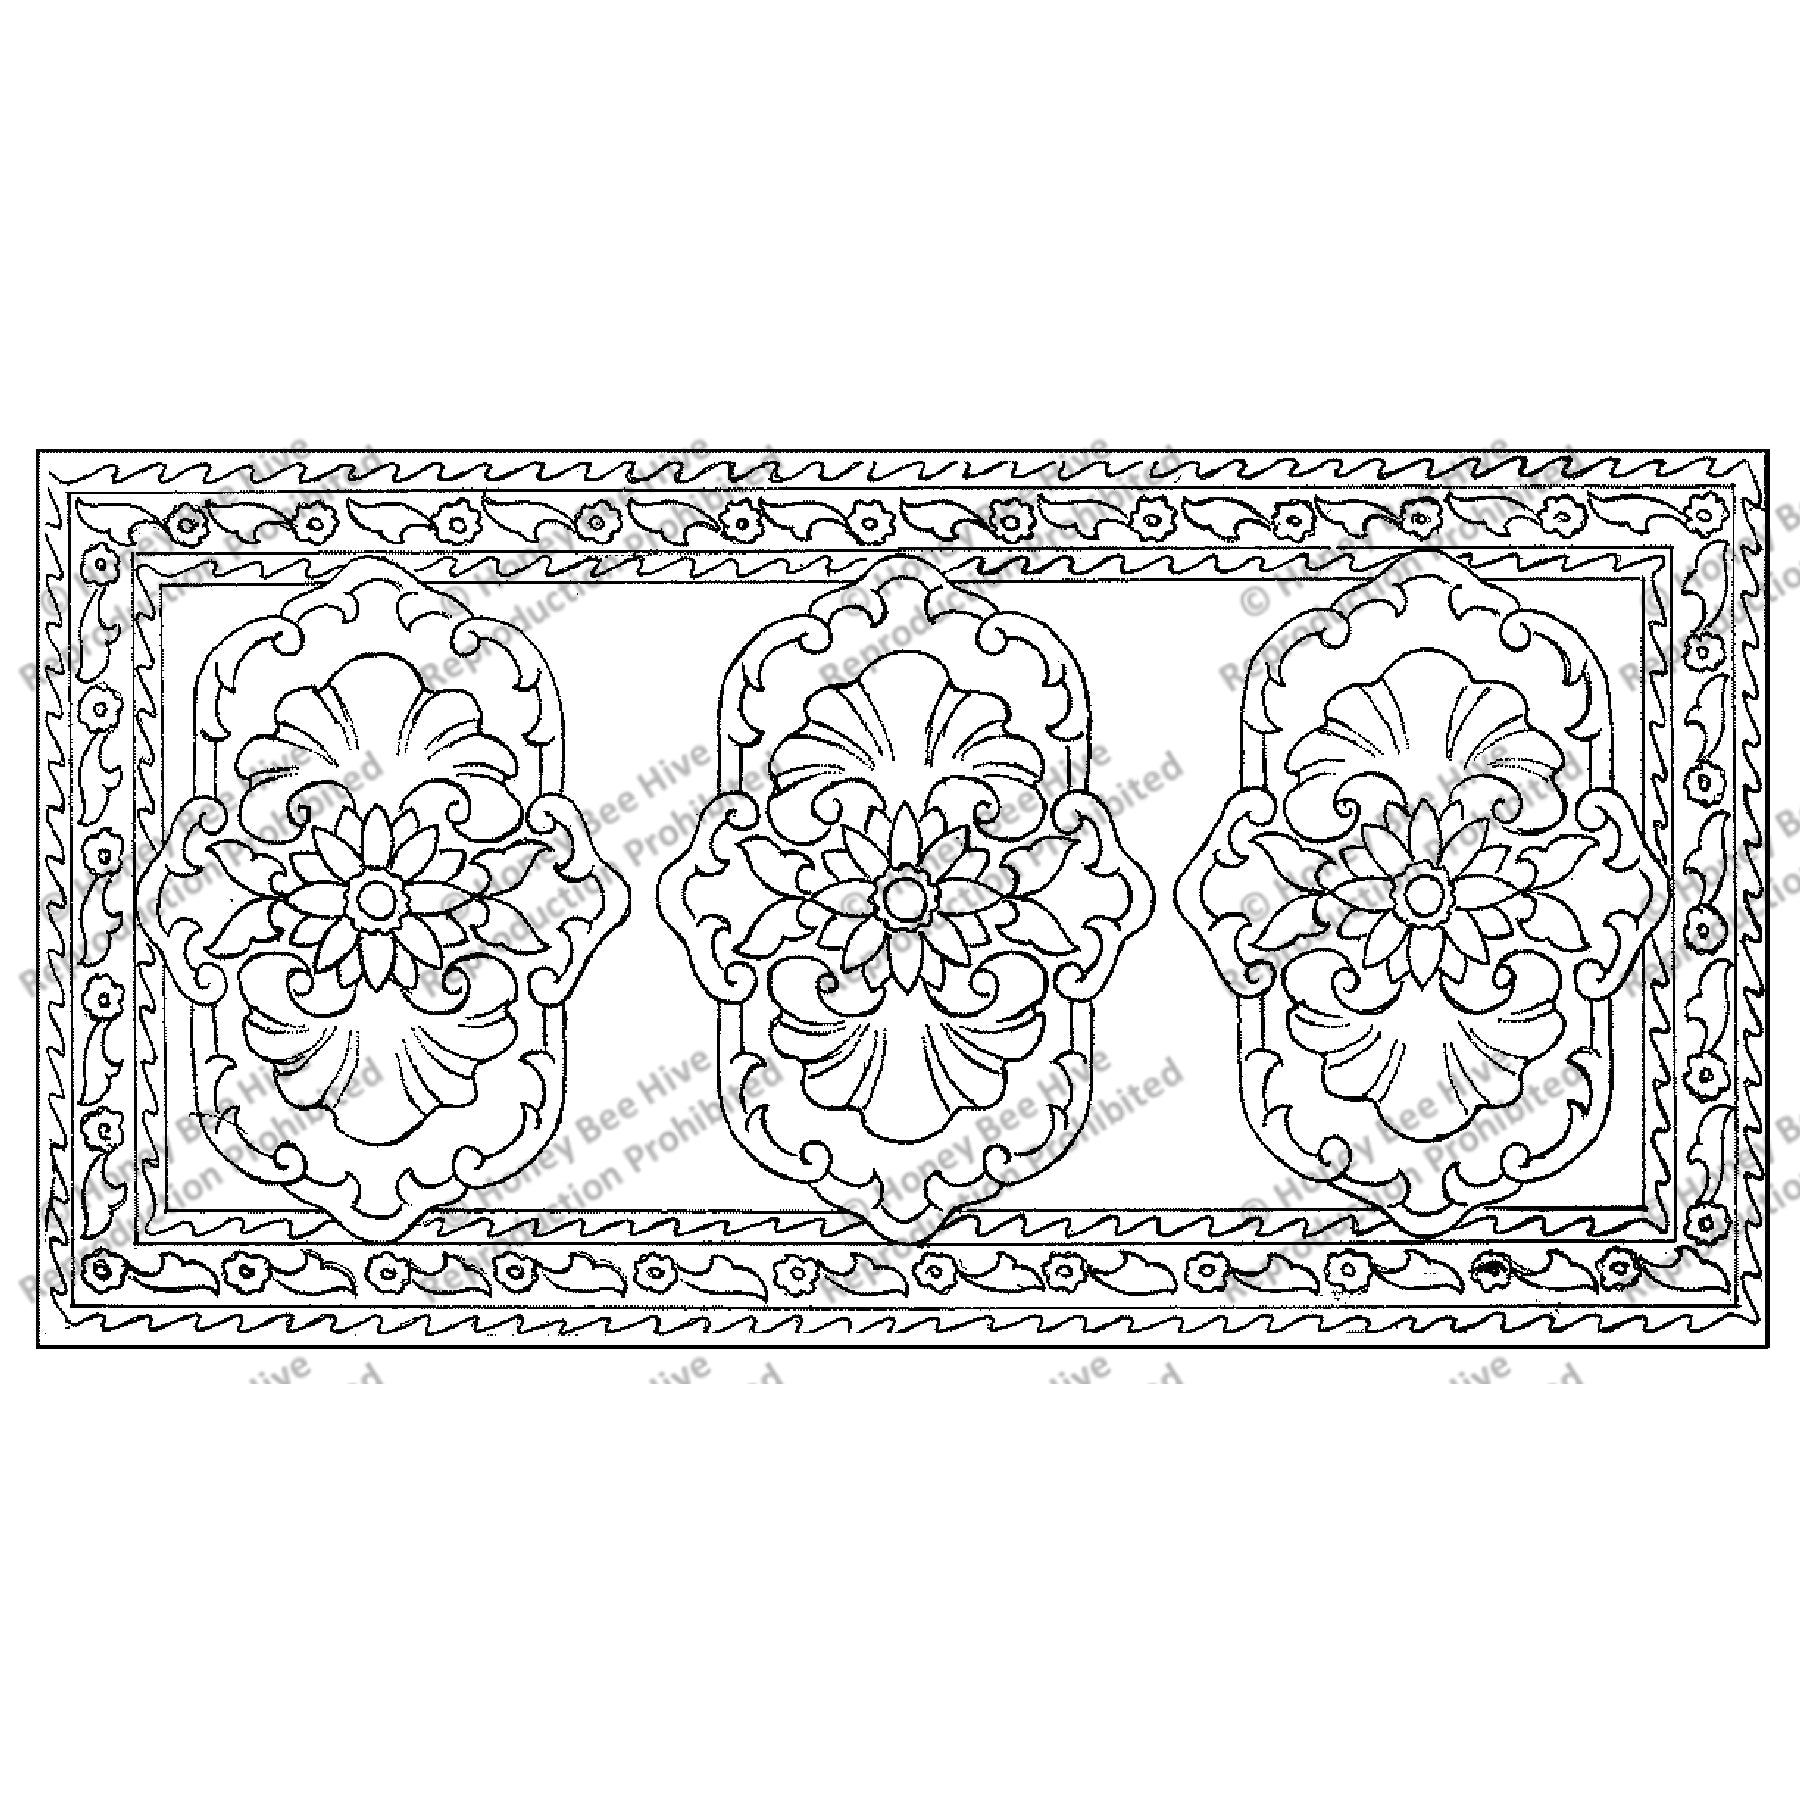 Altman, rug hooking pattern